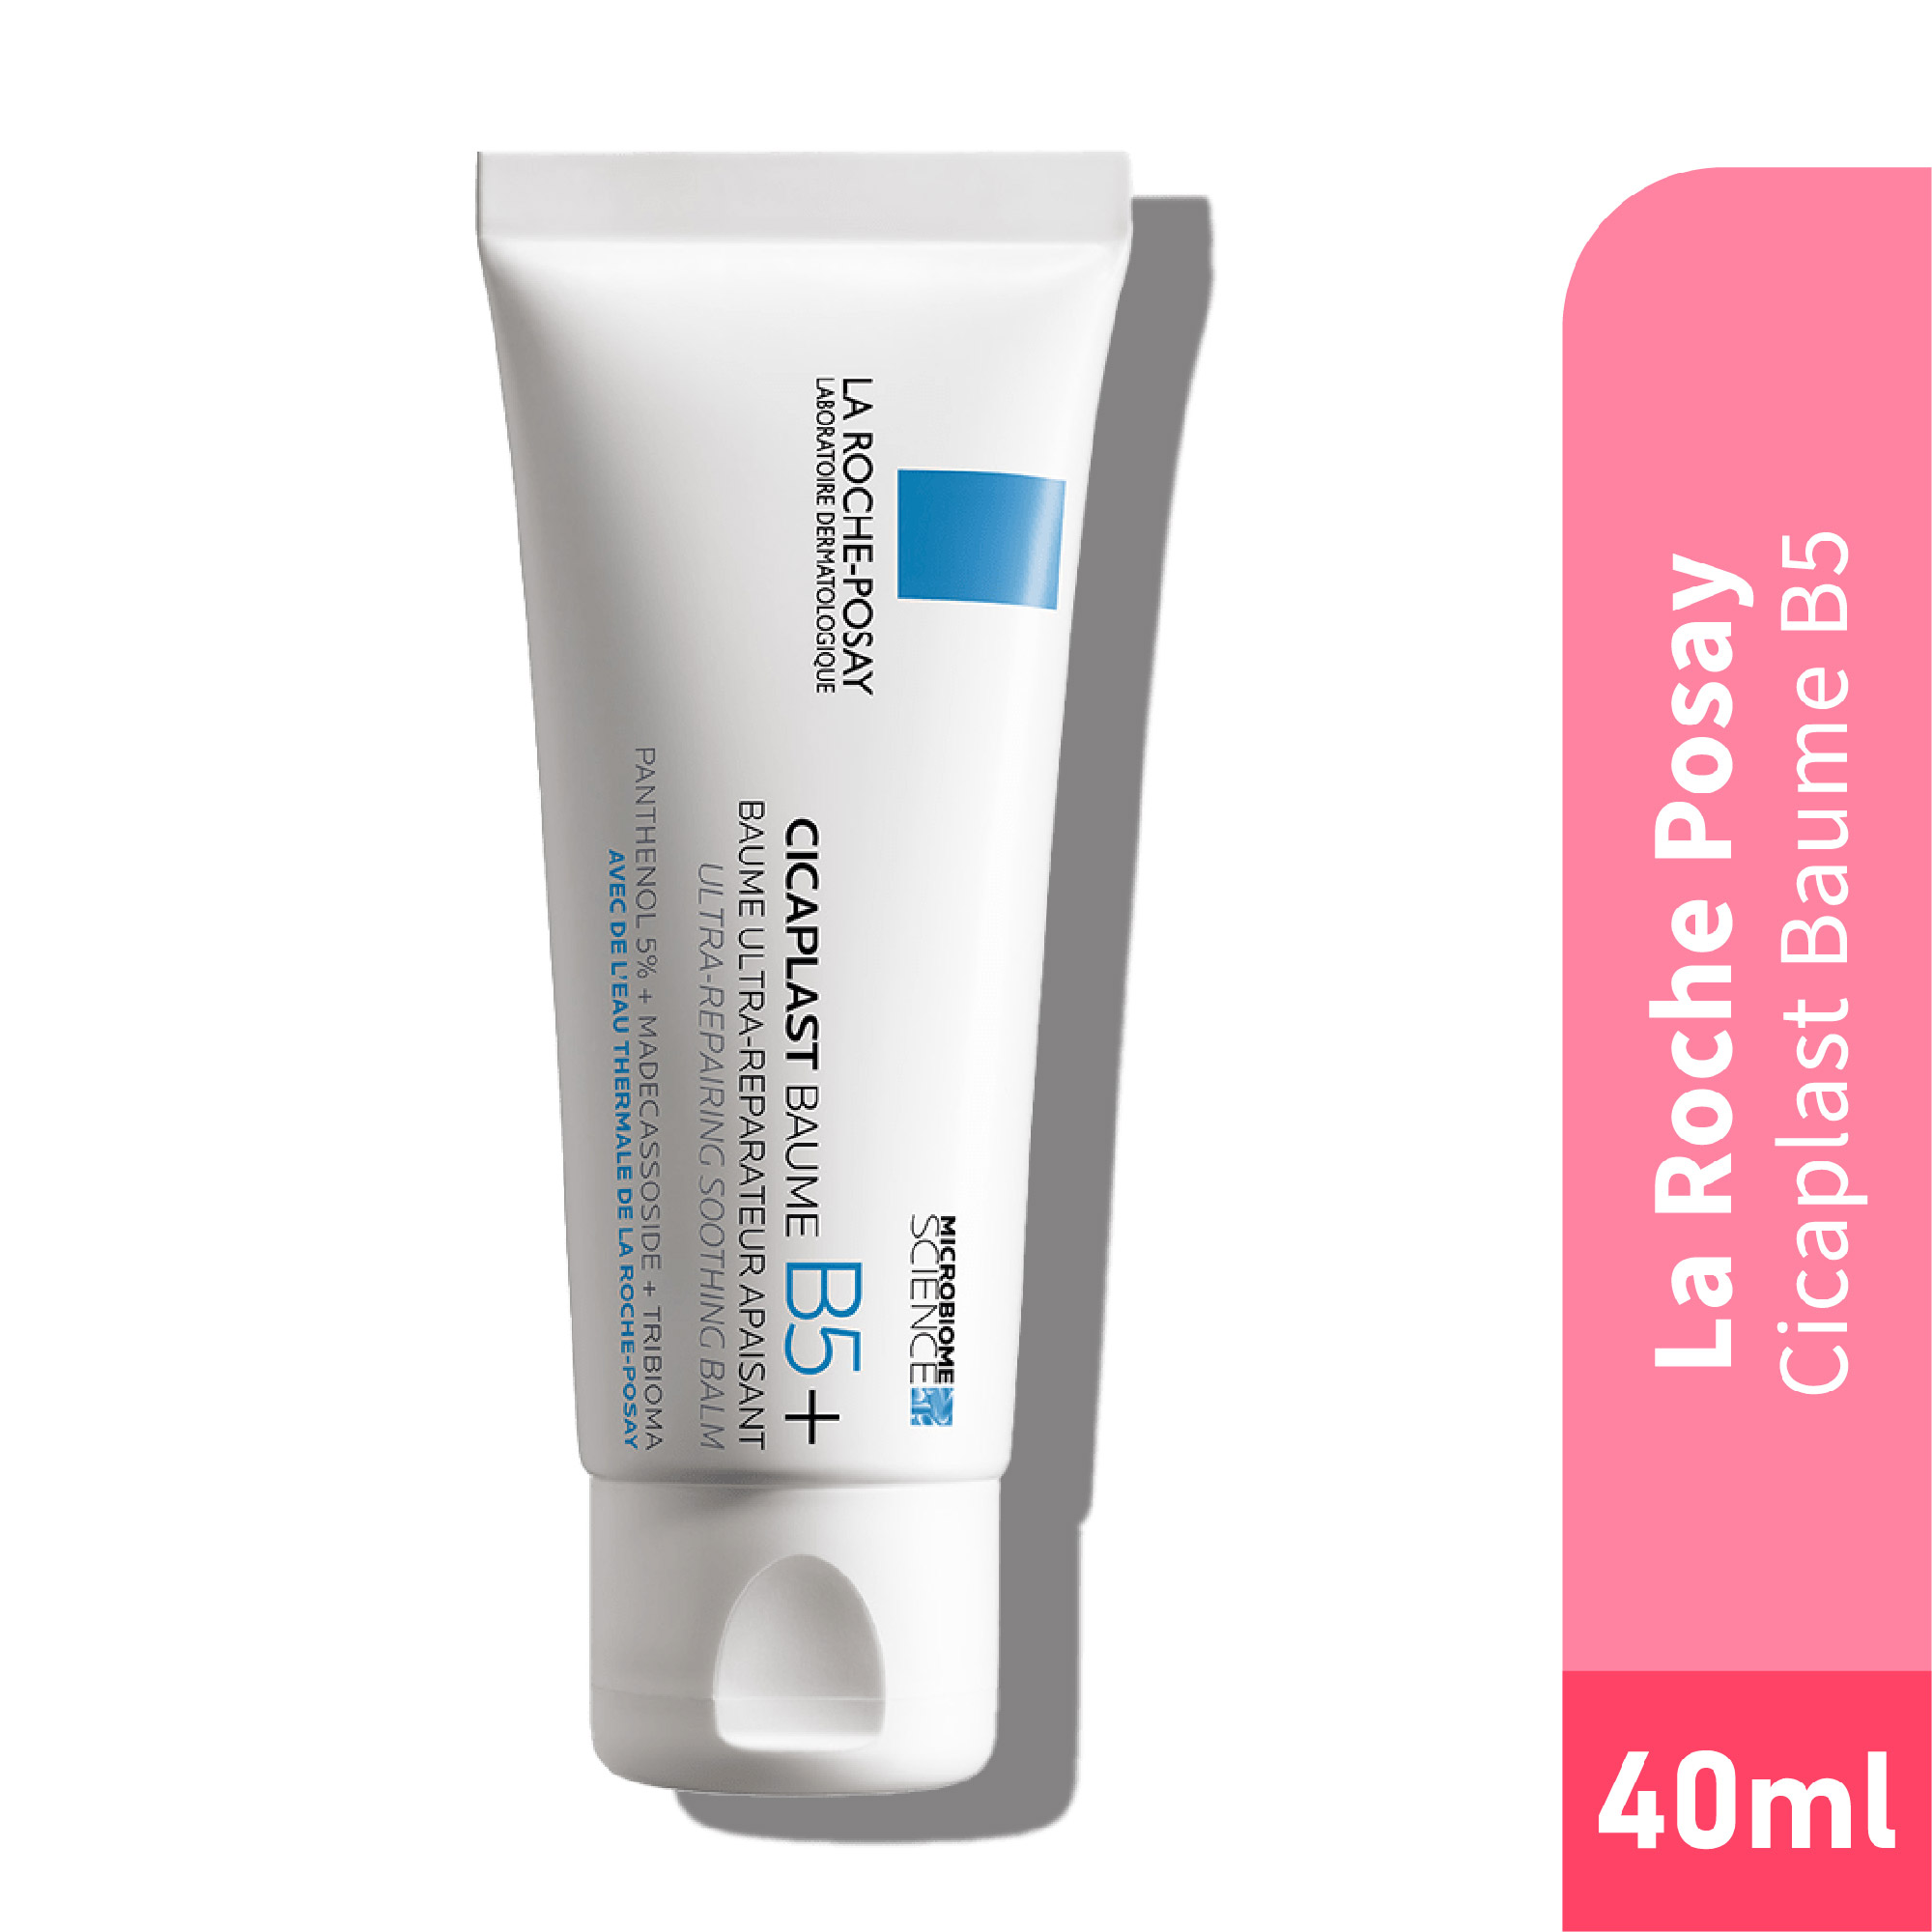 LA ROCHE POSAY Cicaplast Baume B5 Soothing Balm 40ml - Provitamin B5 For Sensitive Dry Skin